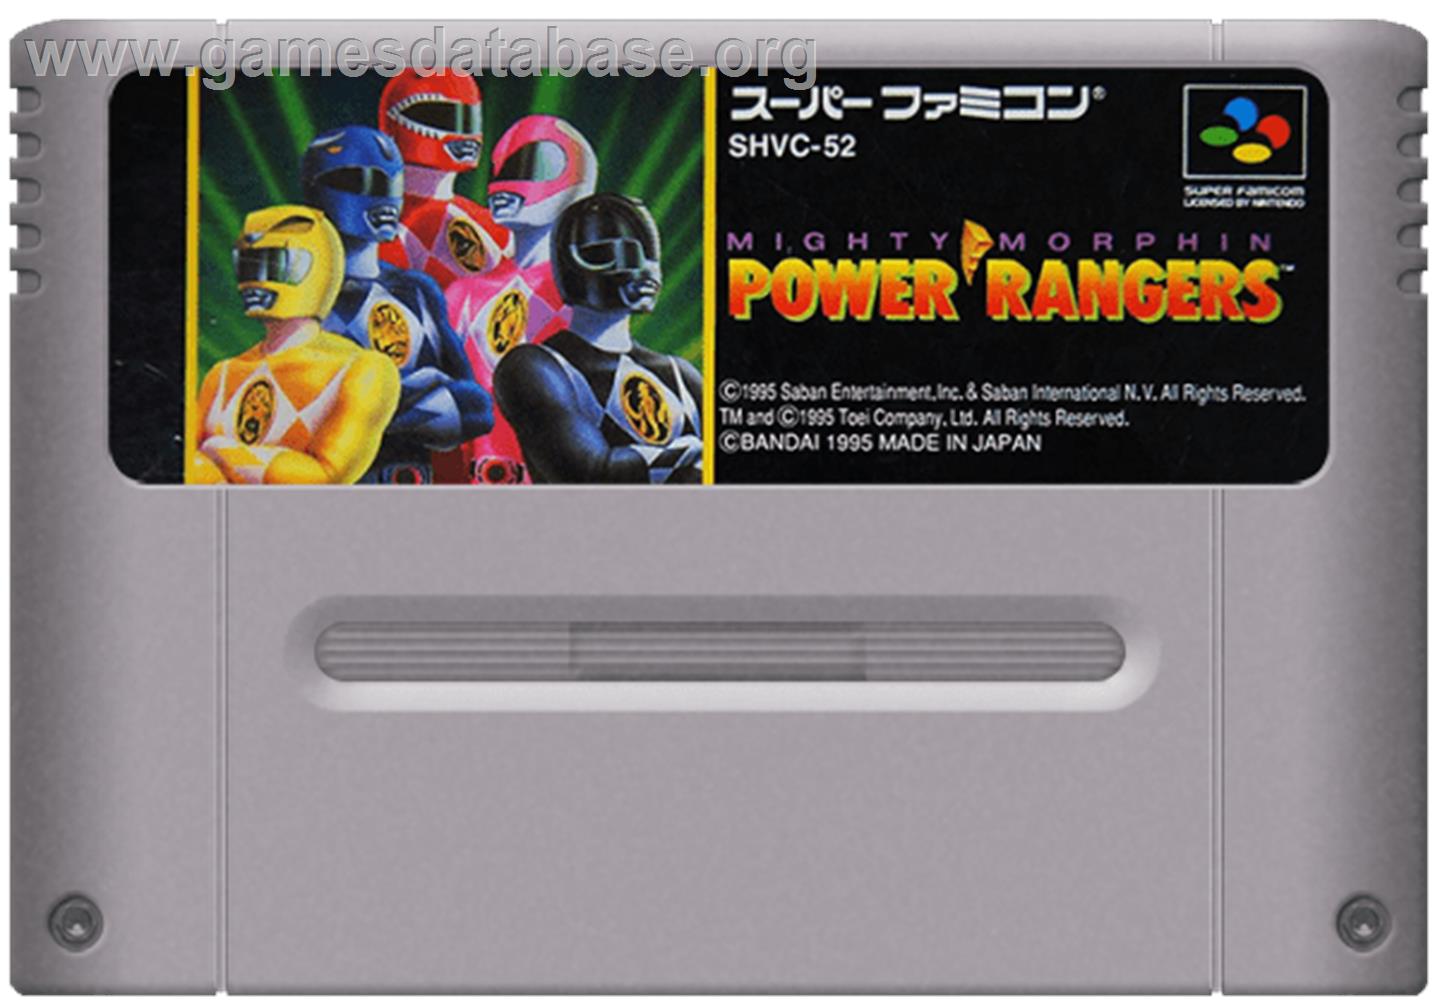 Mighty Morphin Power Rangers: The Fighting Edition - Nintendo SNES - Artwork - Cartridge